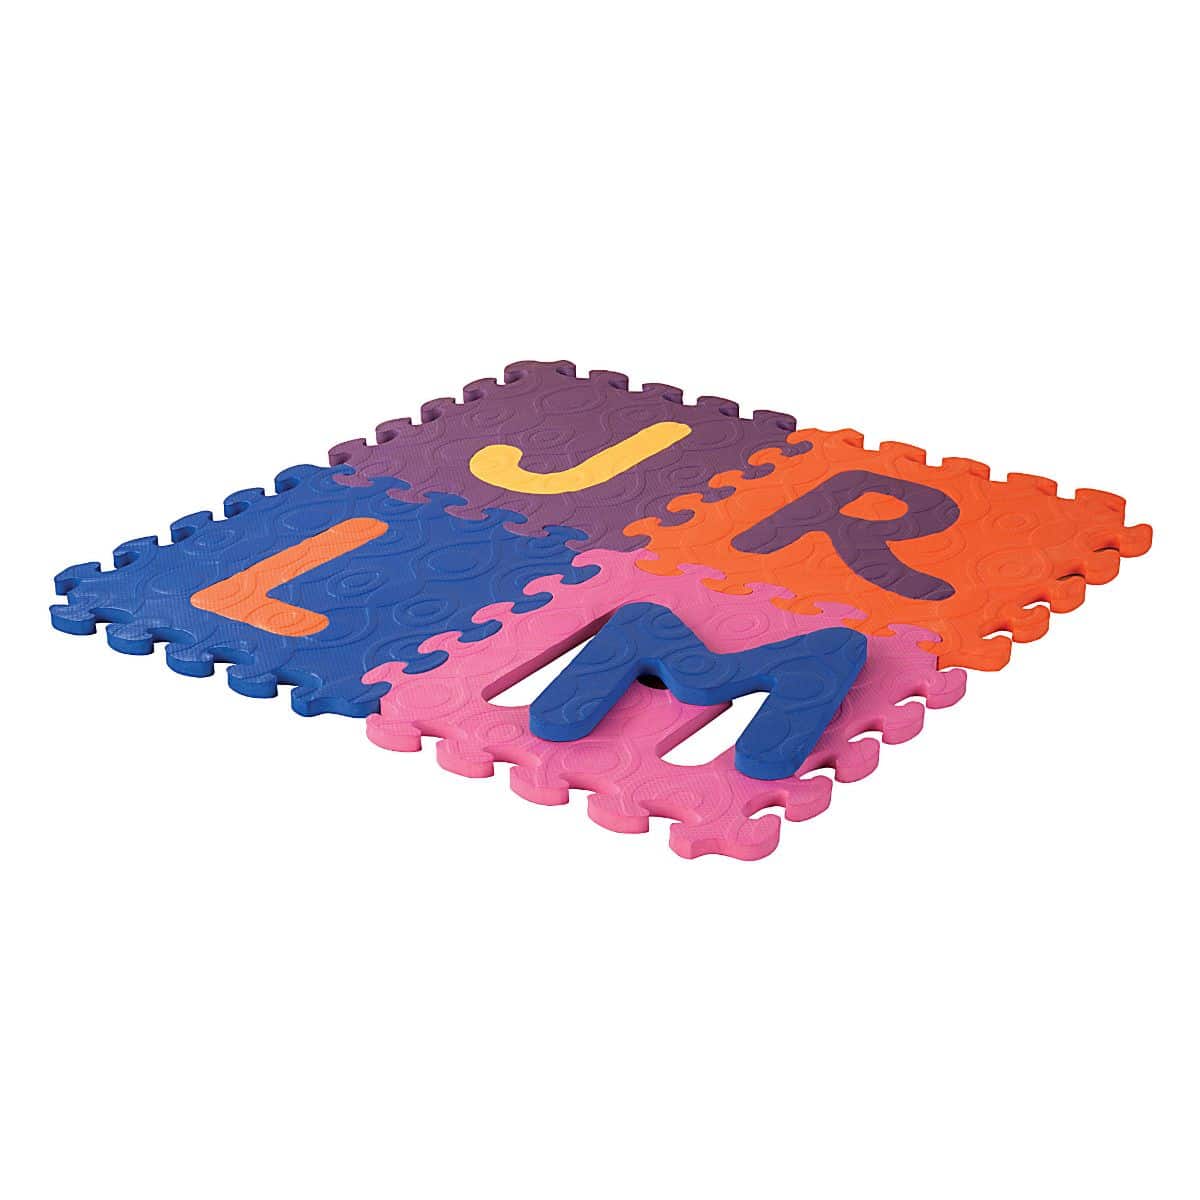 Childrens Foam Tiles, Colorful Foam Tiles